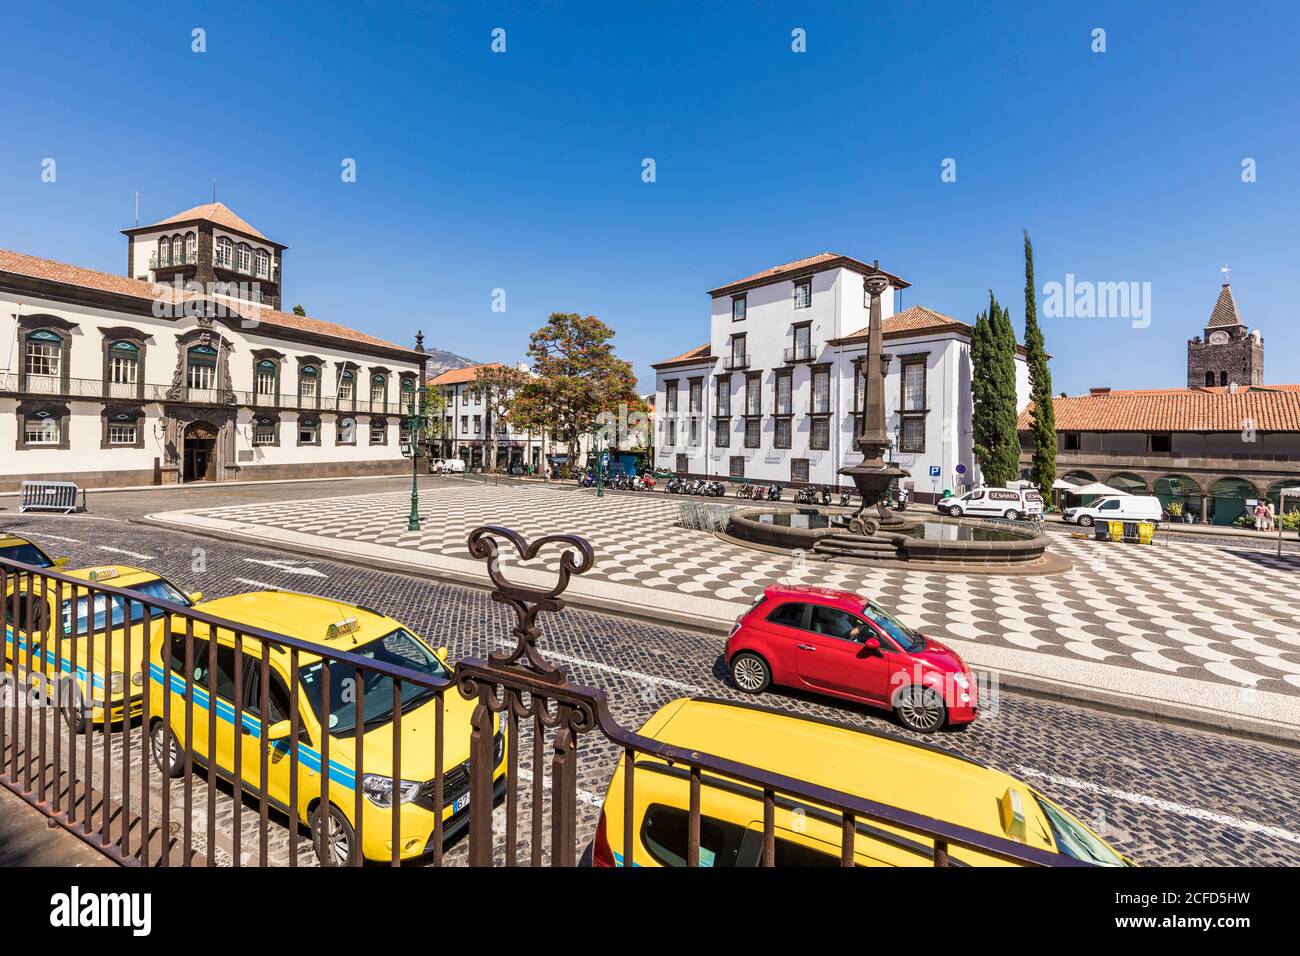 Portugal, Insel Madeira, Funchal, Altstadt, Praca do Municipio, Rathausplatz, Rathaus, Universität, Bischofspalast Stockfoto